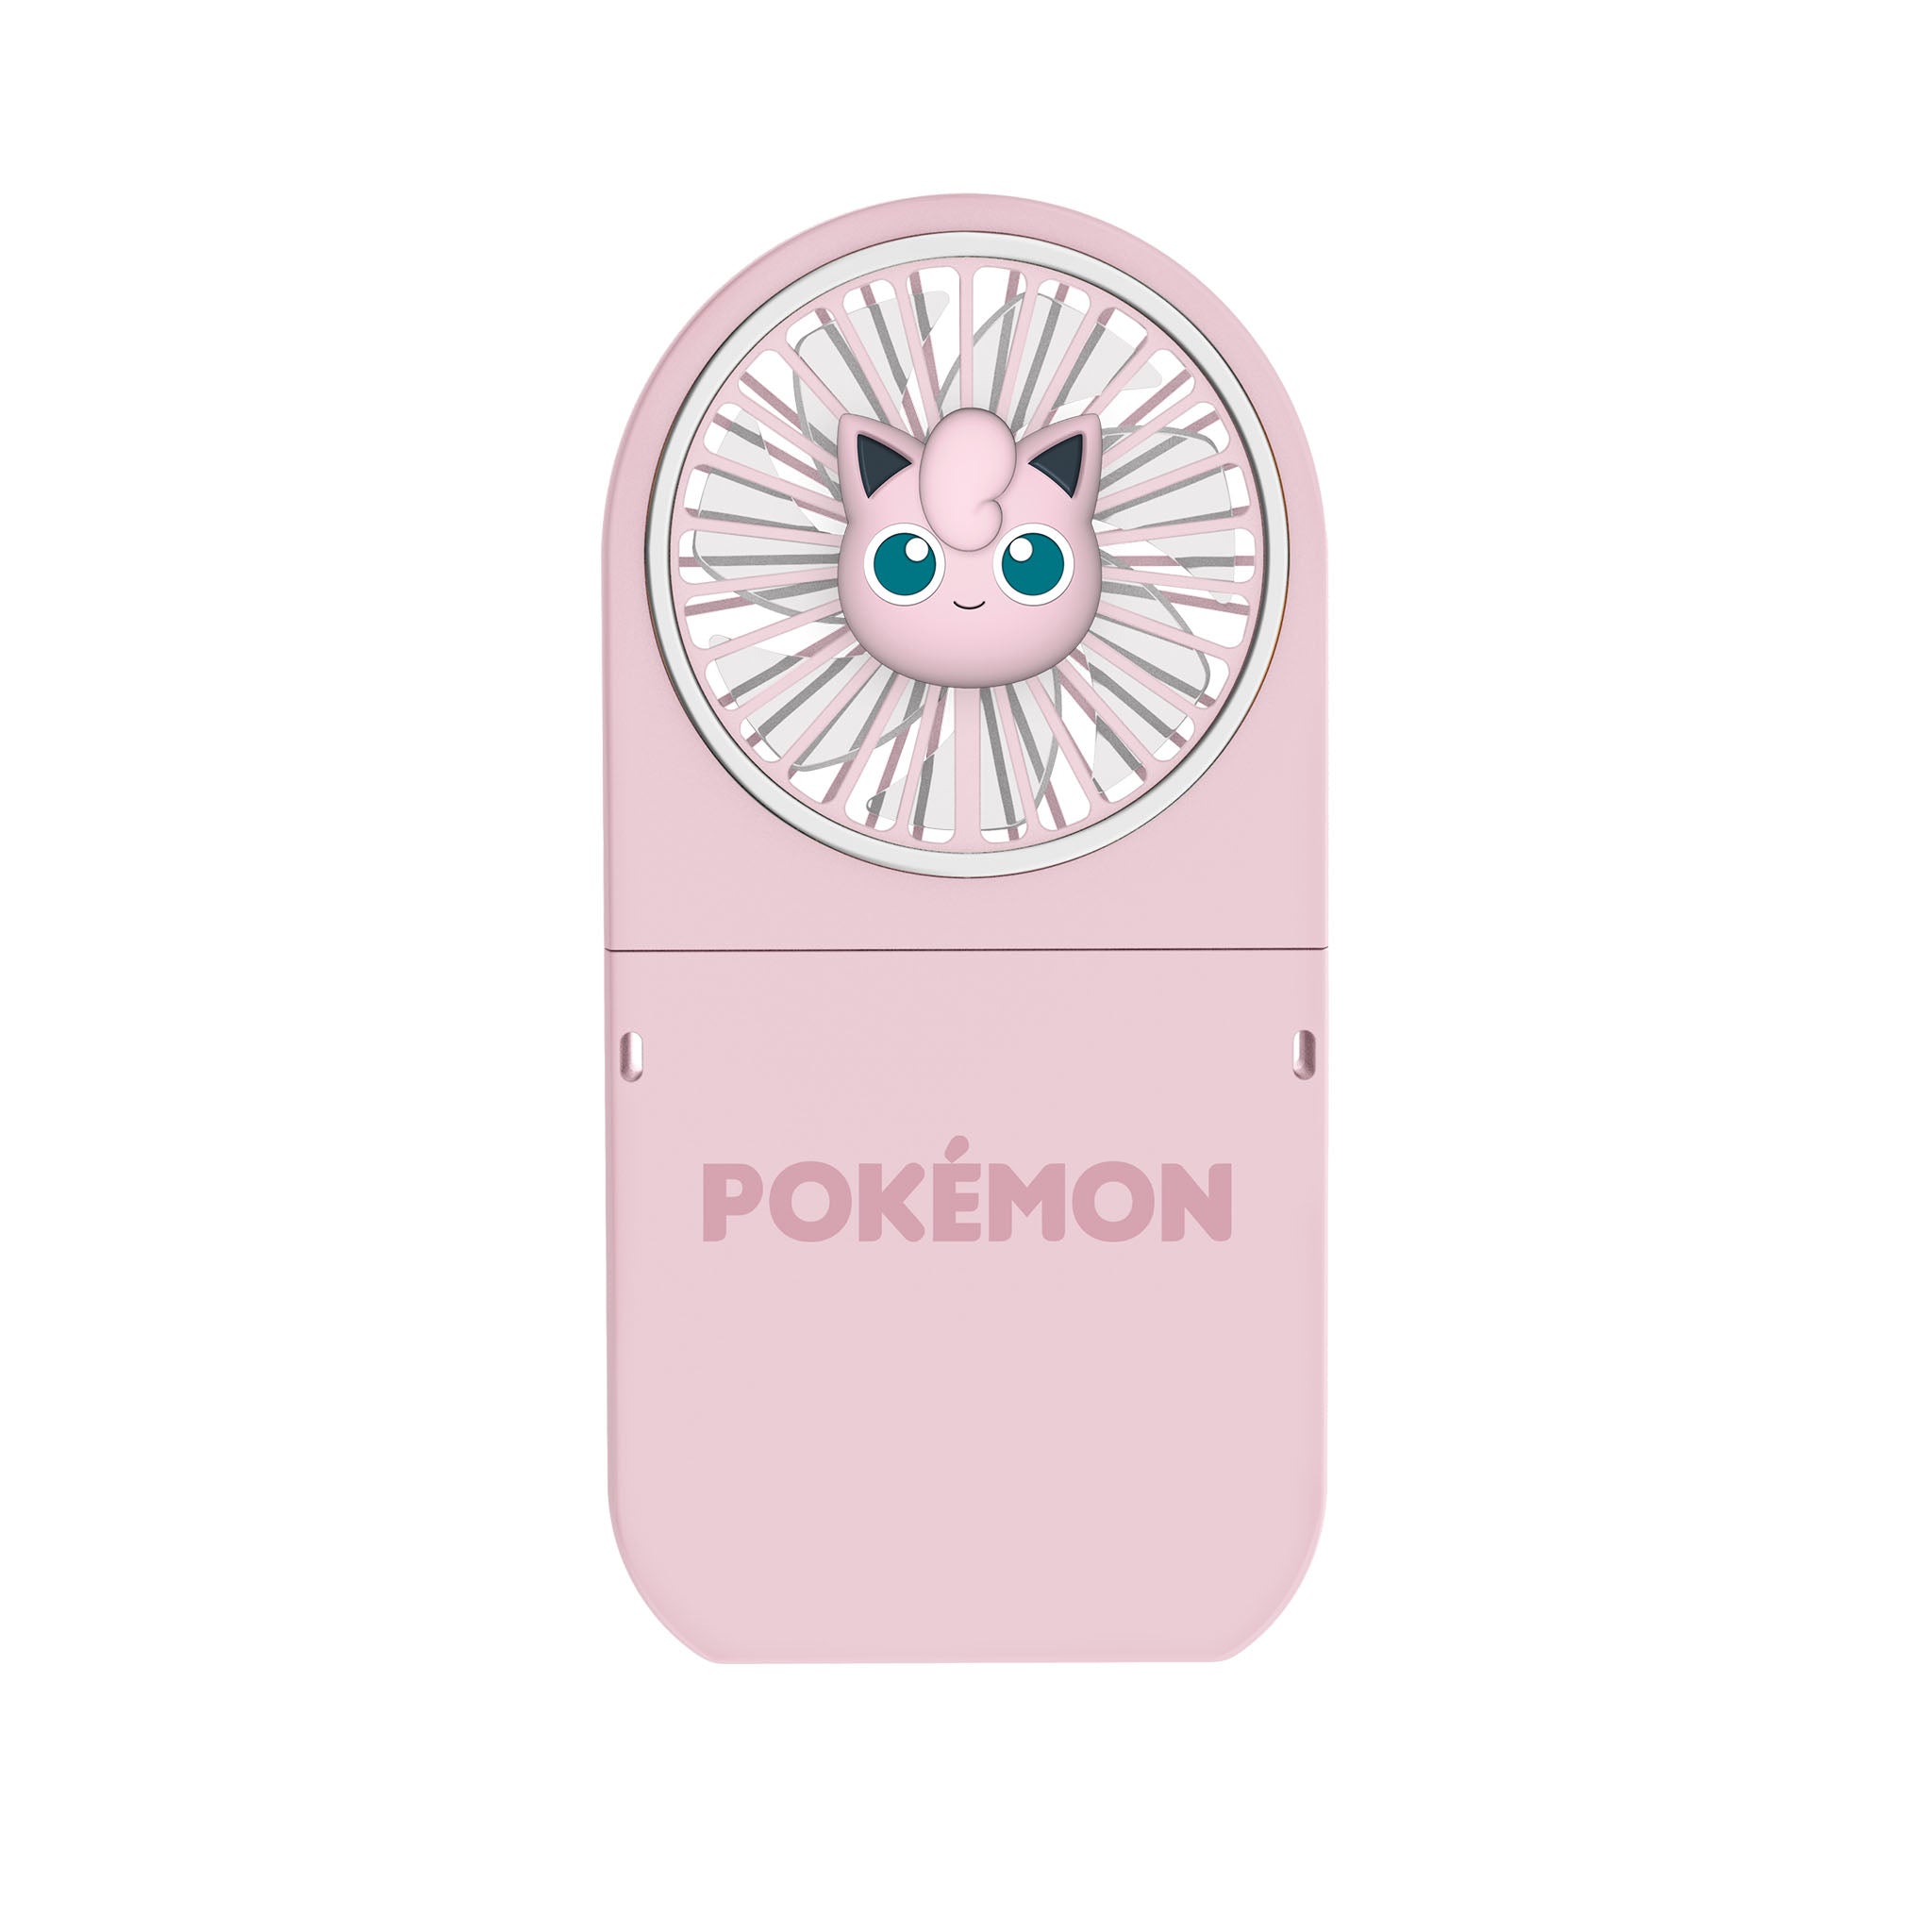 Pokémon Jigglypuff Rechargeable Folding fan - soft pink